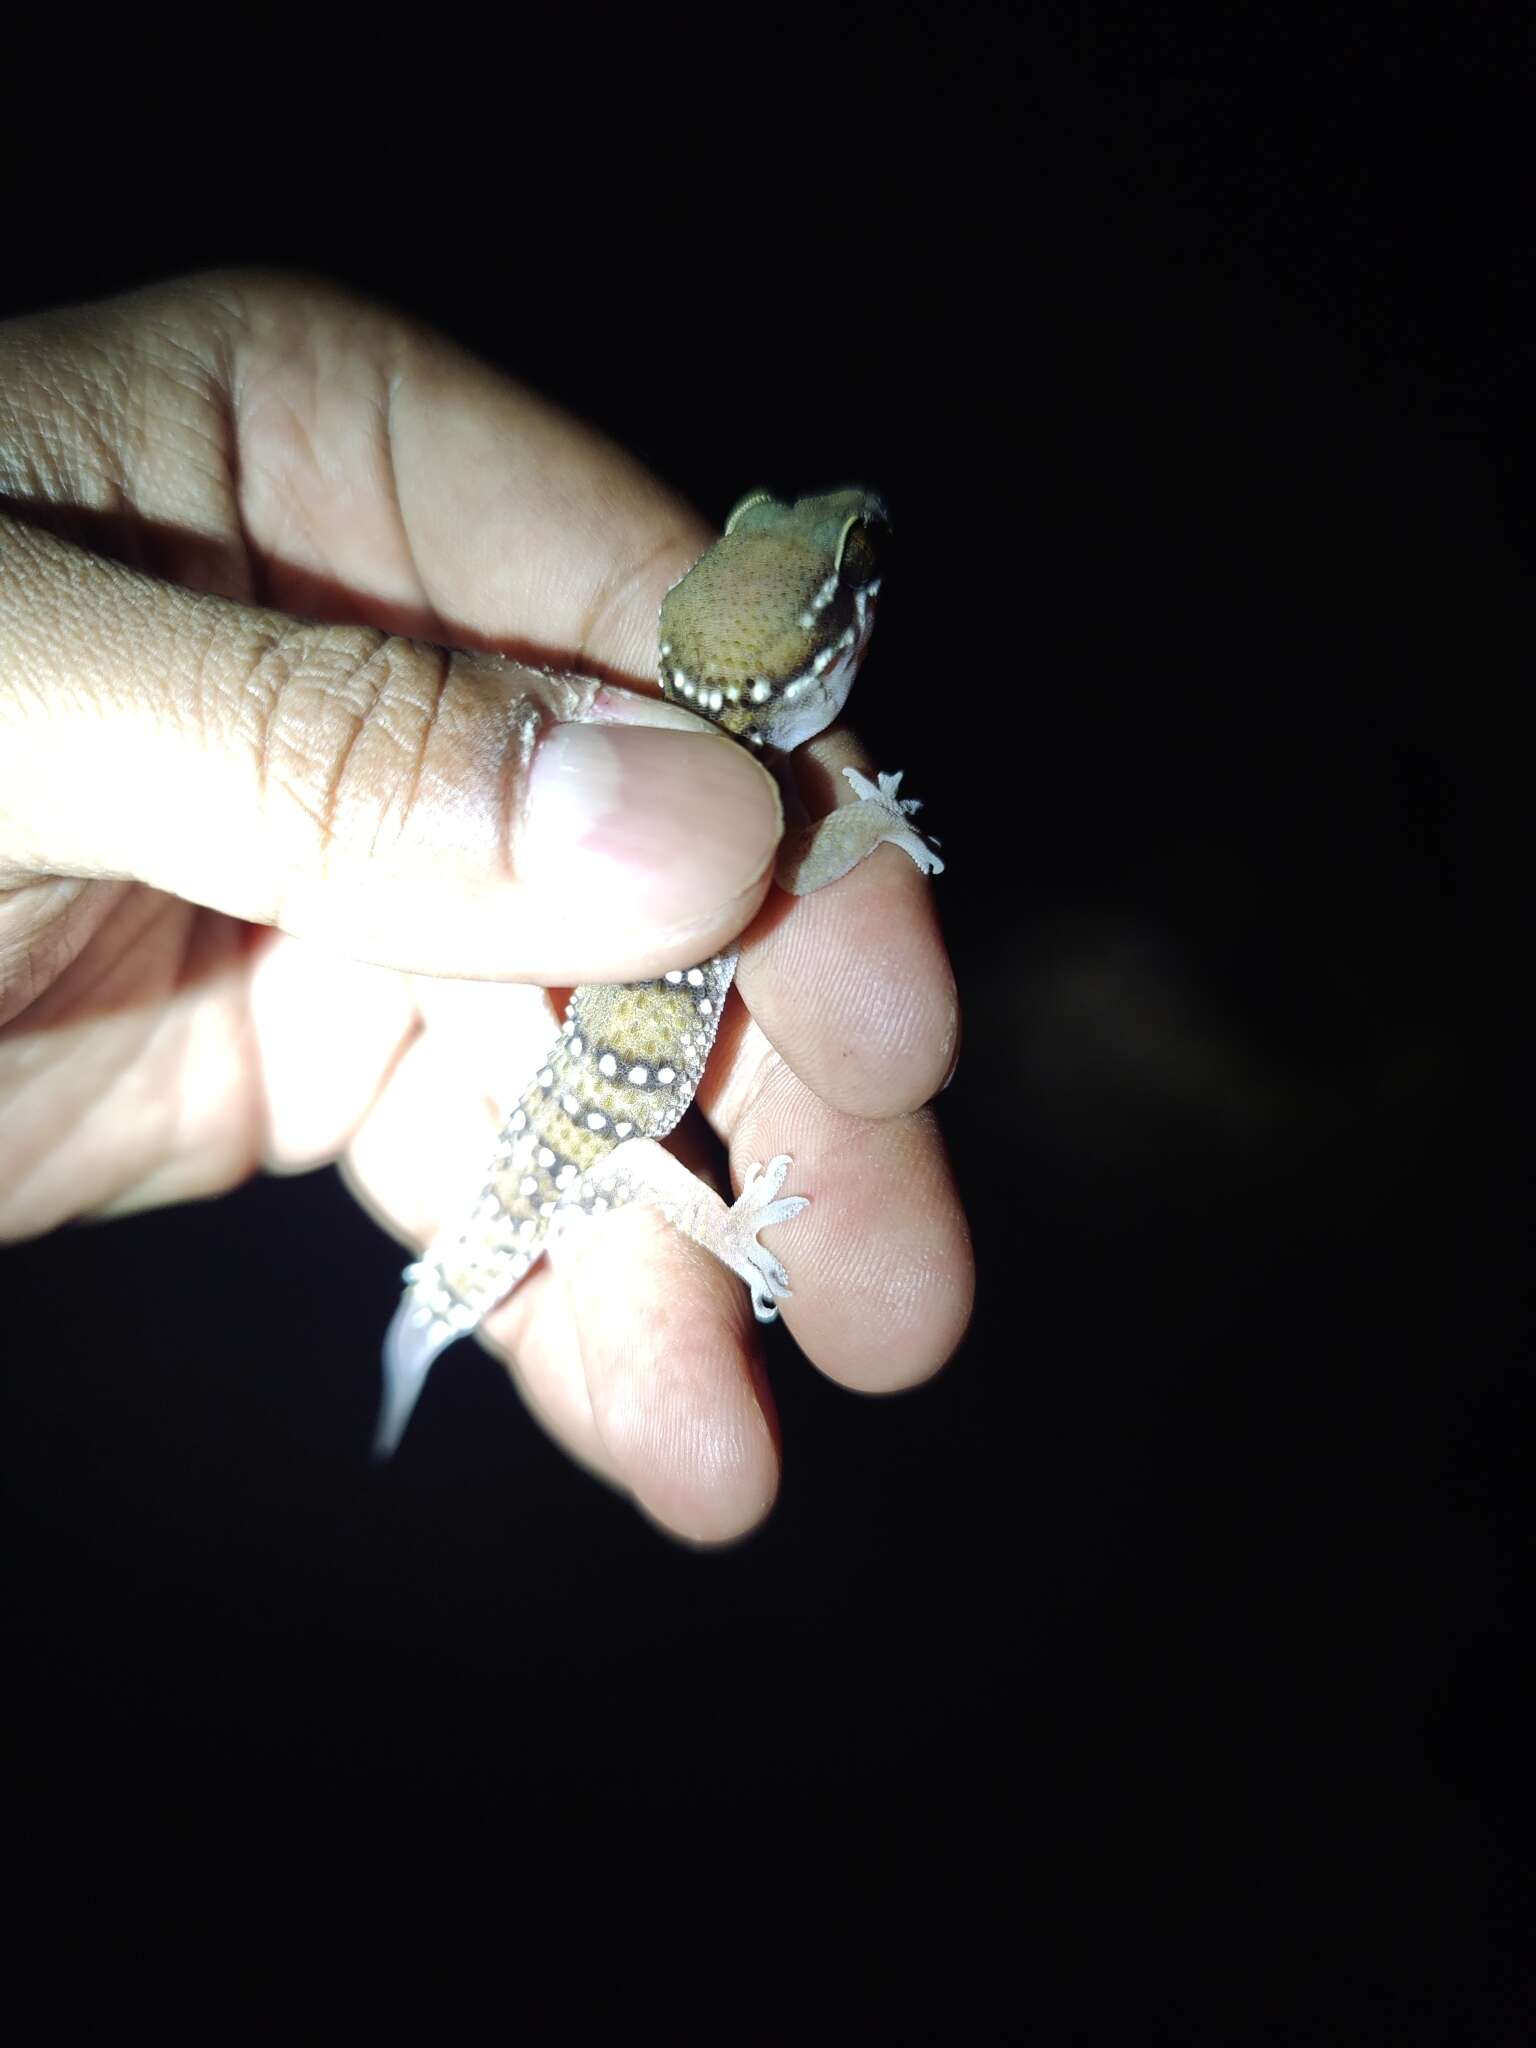 Image de Hemidactylus whitakeri Mirza, Gowande, Patil, Ambekar & Patel 2018